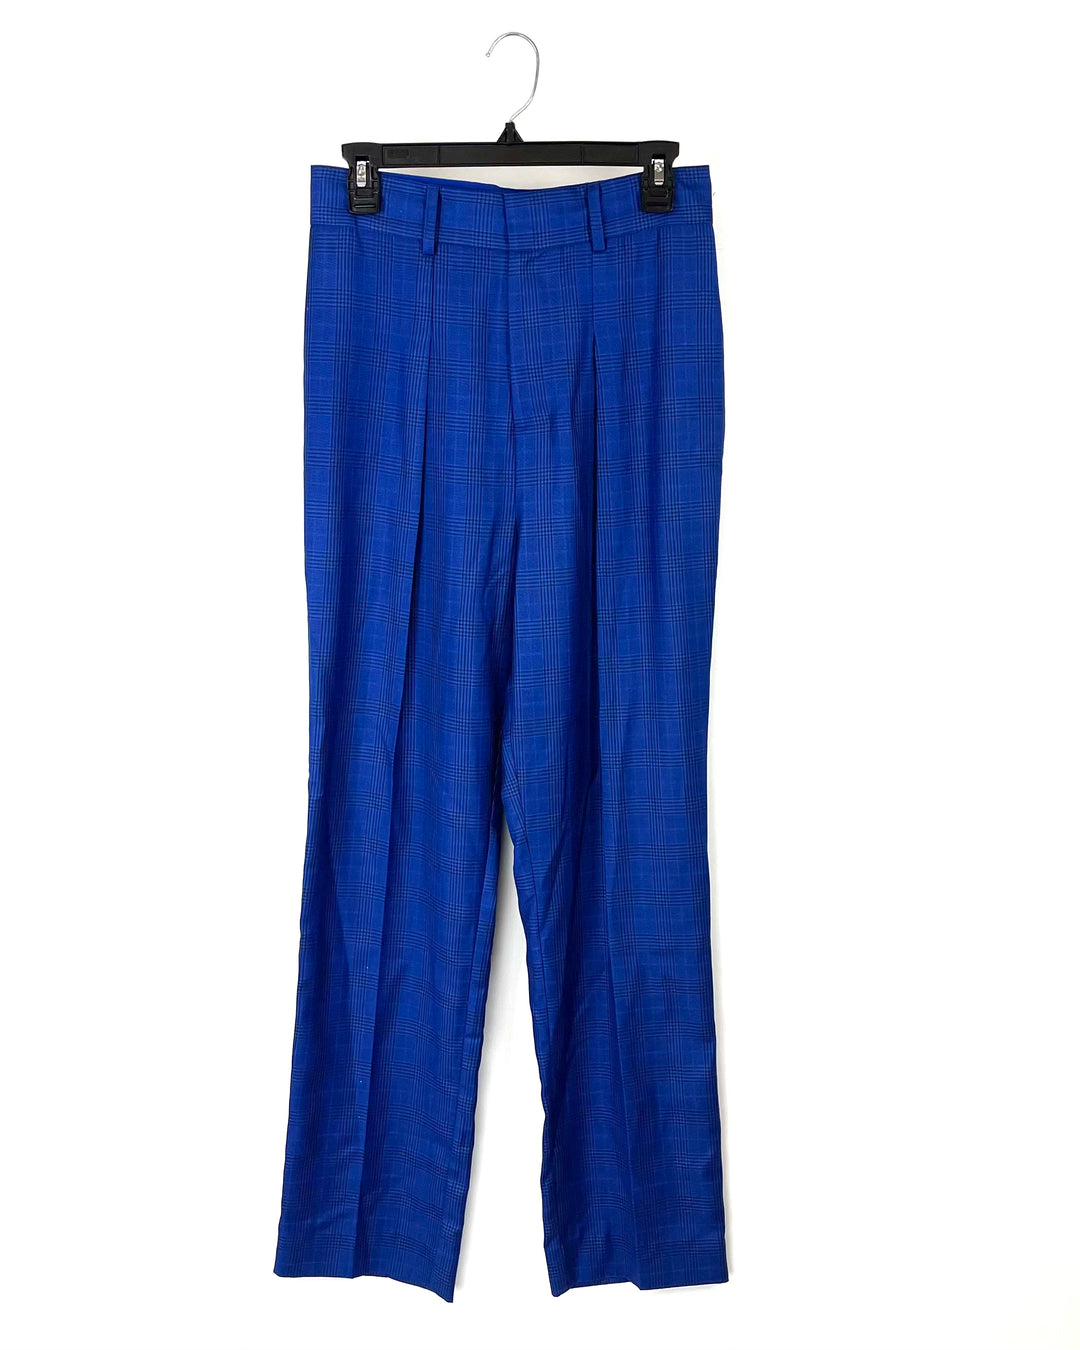 Royal Blue Plaid Trousers - Small